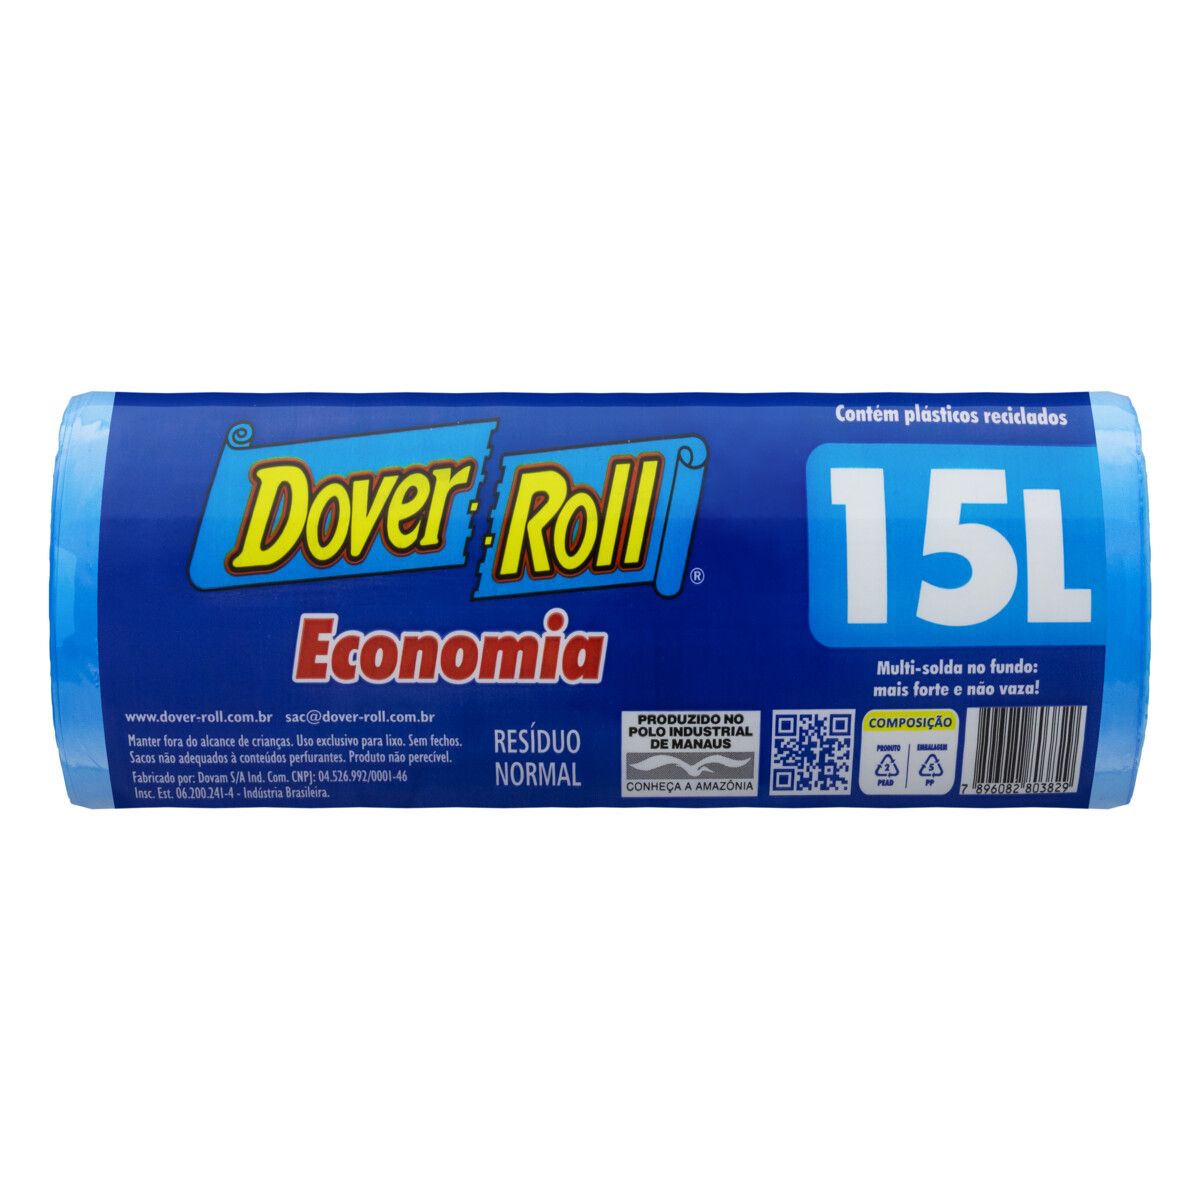 Saco para Lixo Dover Roll 15L Economia 60 Unidades image number 1